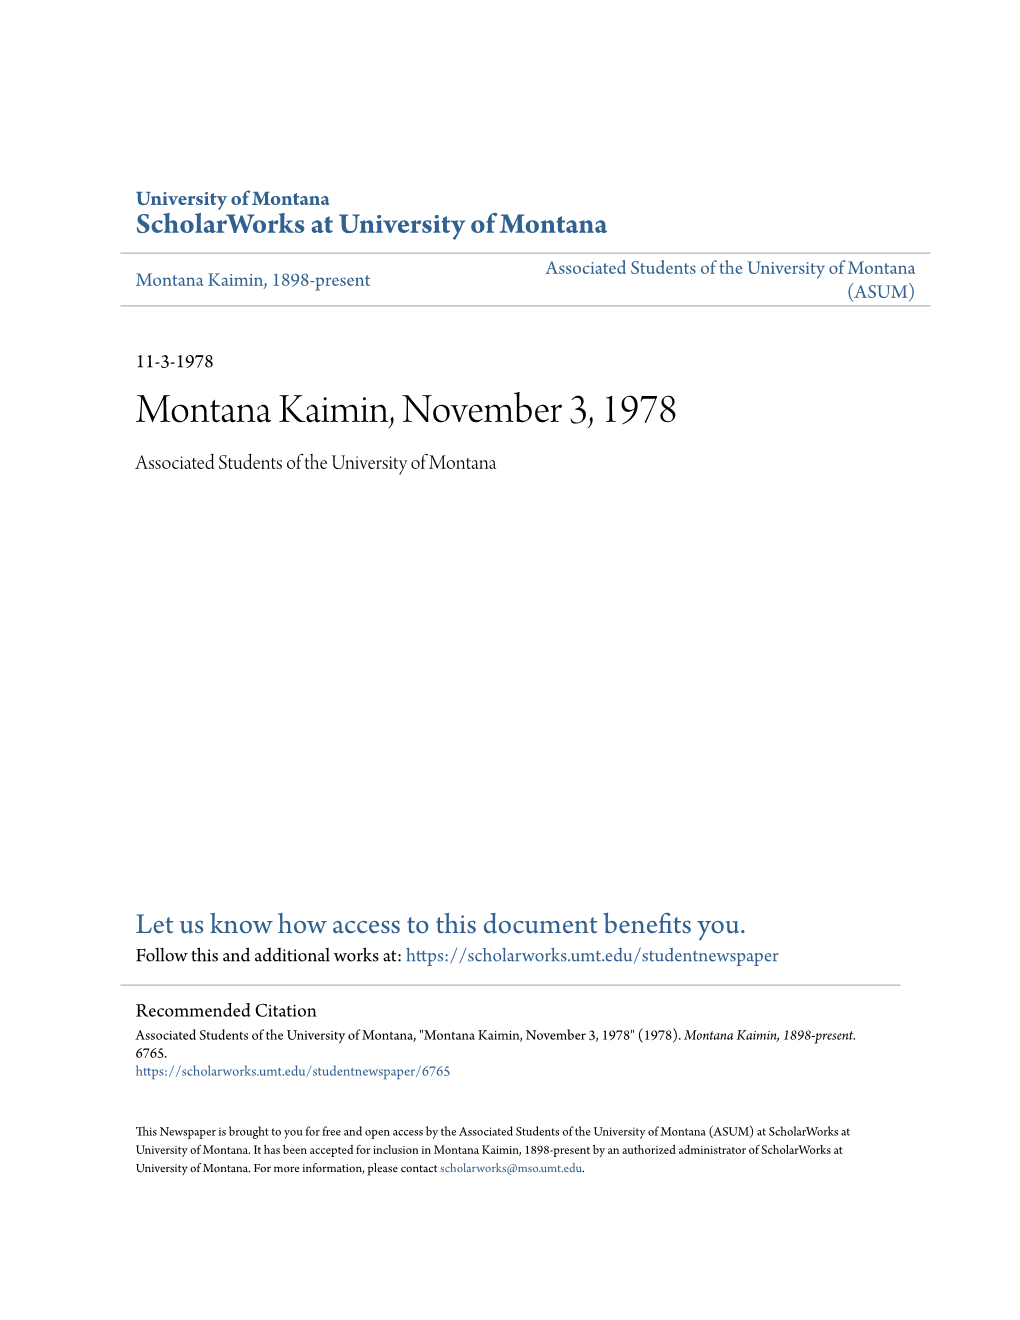 Montana Kaimin, November 3, 1978 Associated Students of the University of Montana